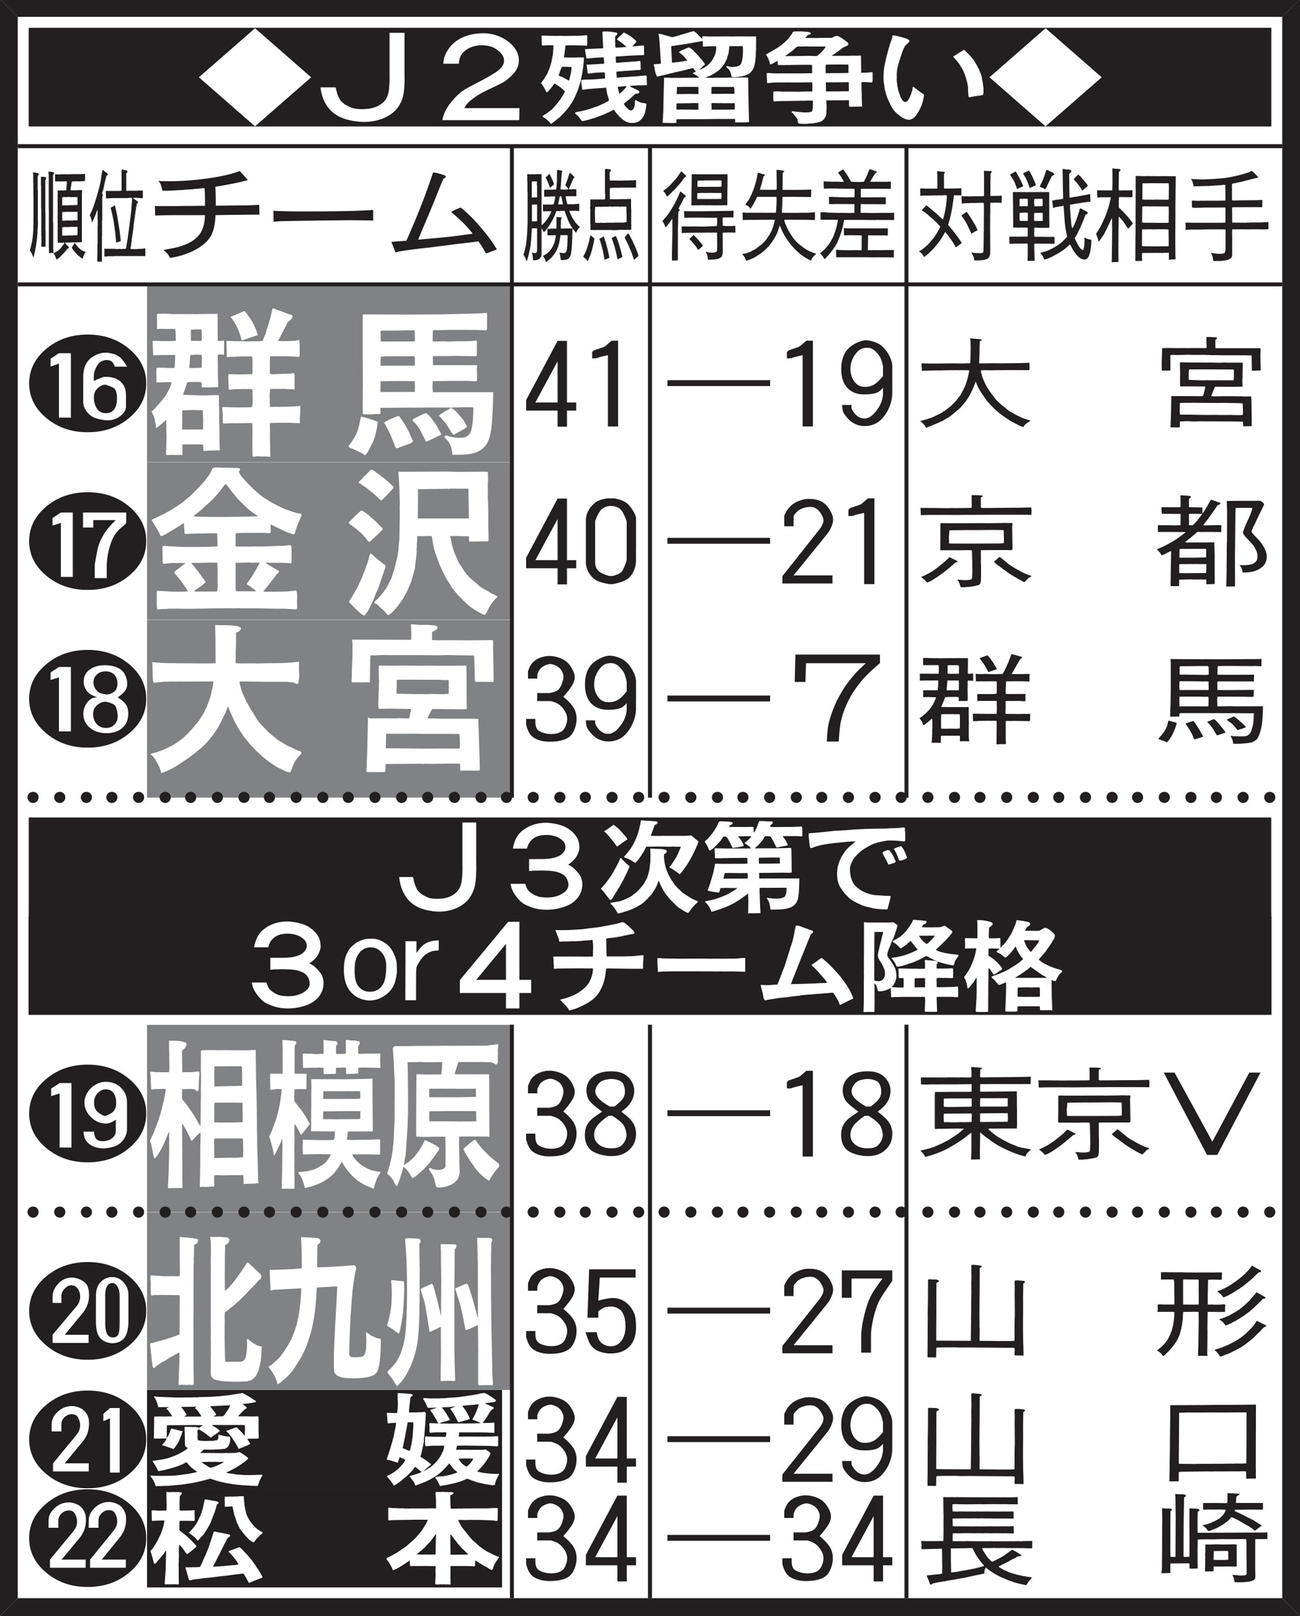 J2残留争い
【注】愛媛、松本は降格が決定。J3宮崎が2位以内なら3チームが、3位以下なら4チームが降格